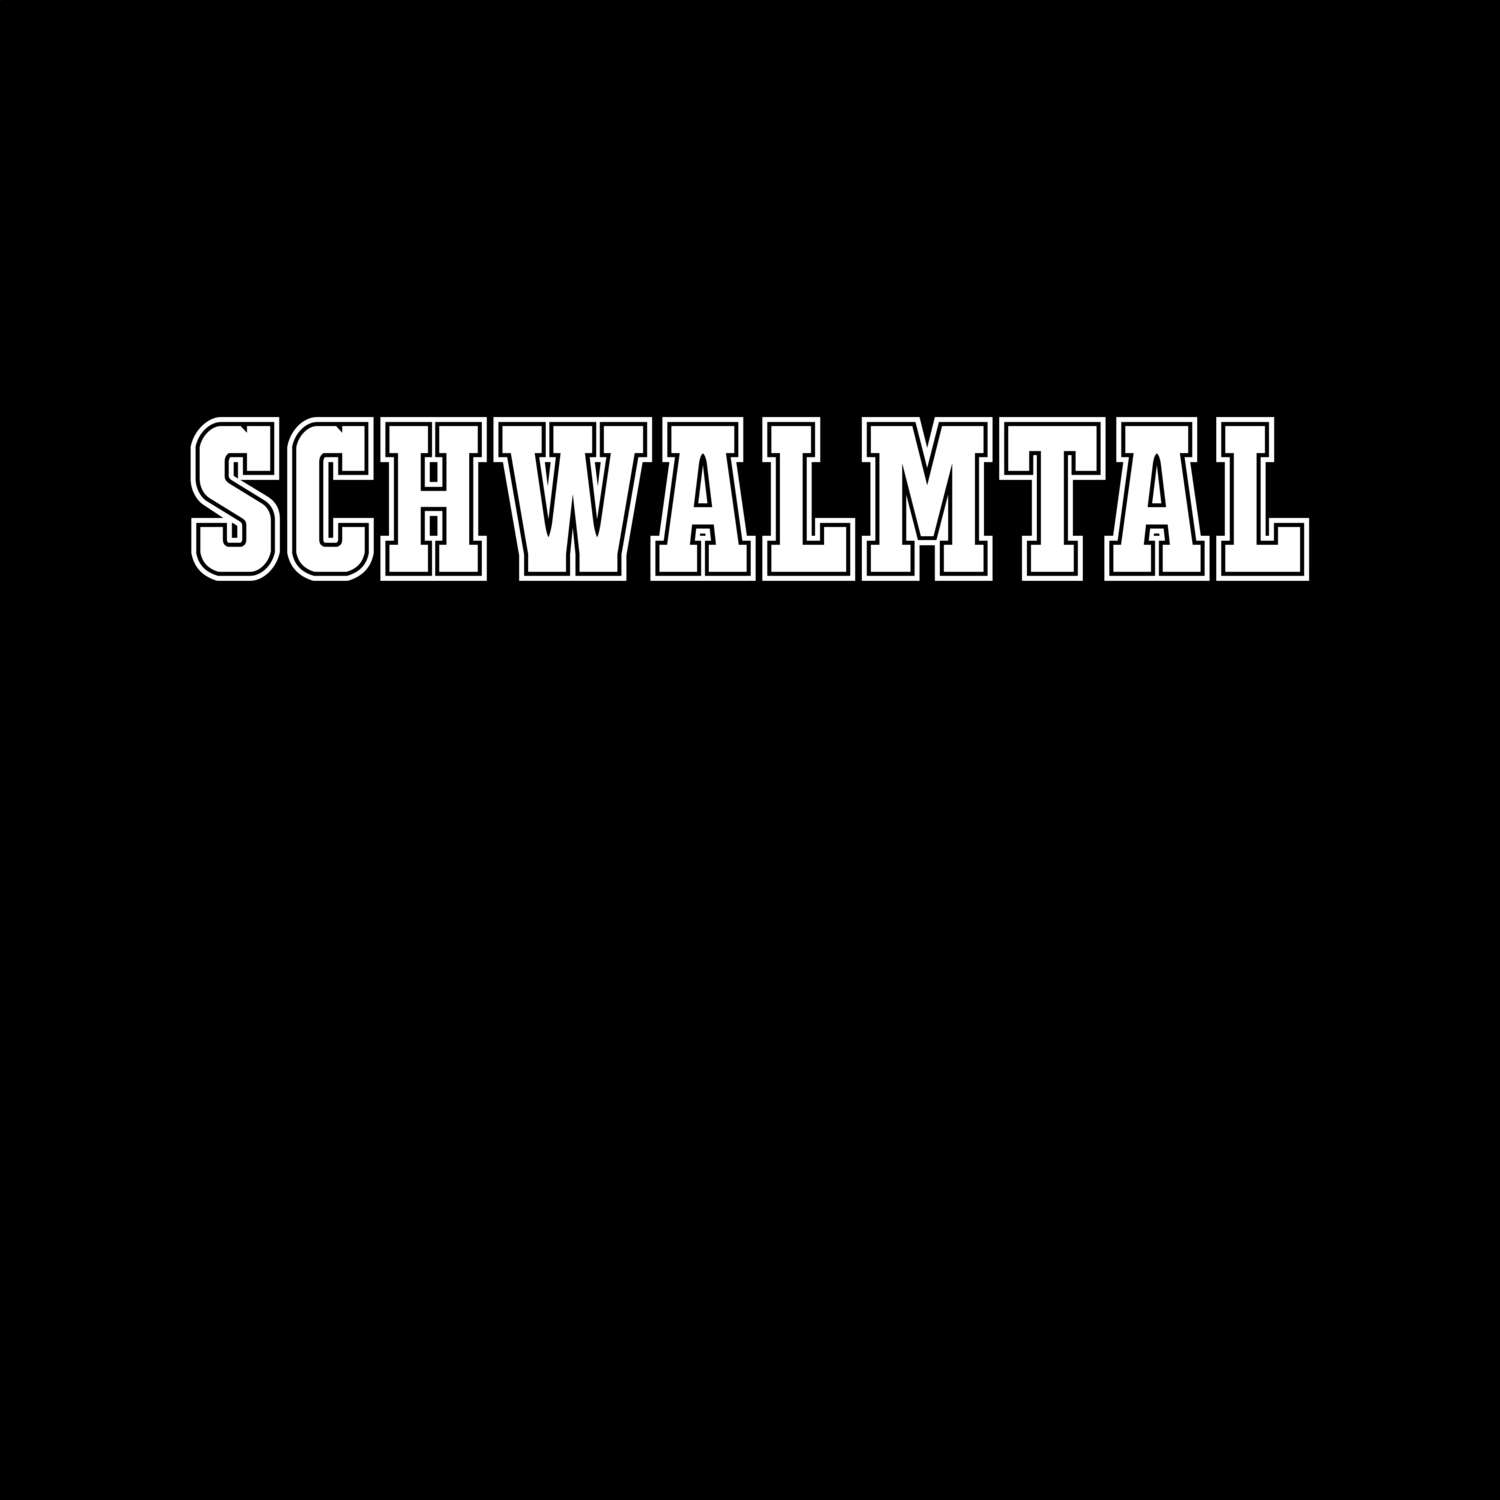 Schwalmtal T-Shirt »Classic«